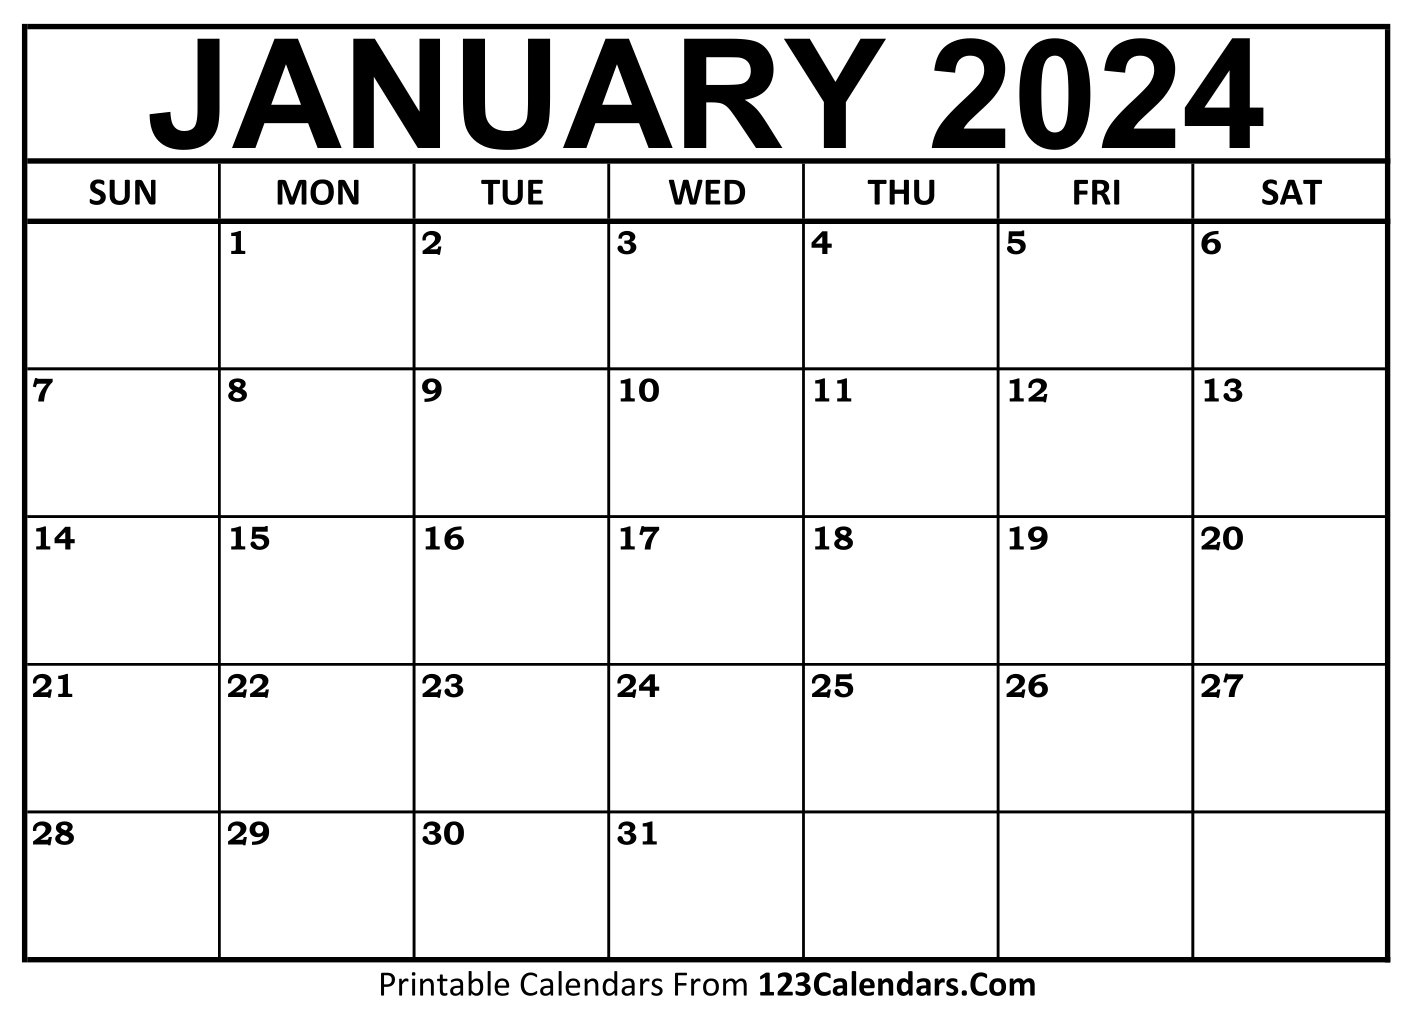 Printable January 2024 Calendar Templates - 123Calendars | 2024 Monthly Calendar Printable